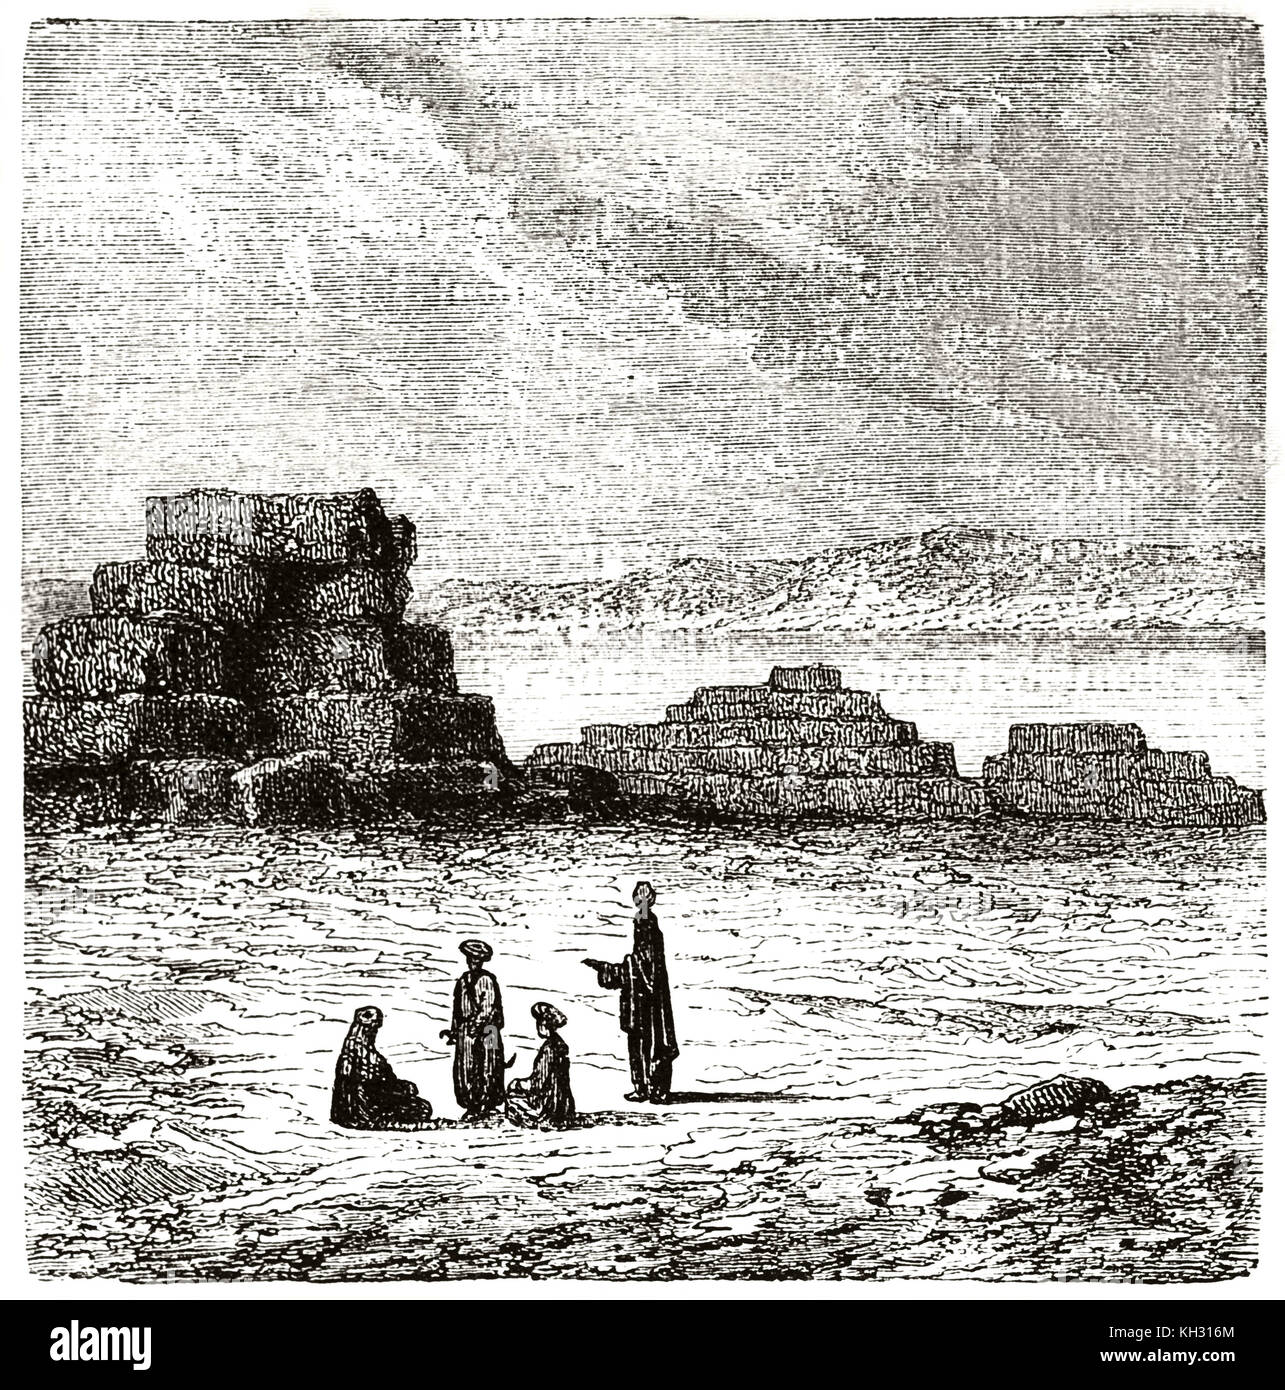 Old view of Arwad isle city walls, Syria. By De Bar after Lockroy, publ. on le Tour du Monde, Paris, 1863 Stock Photo